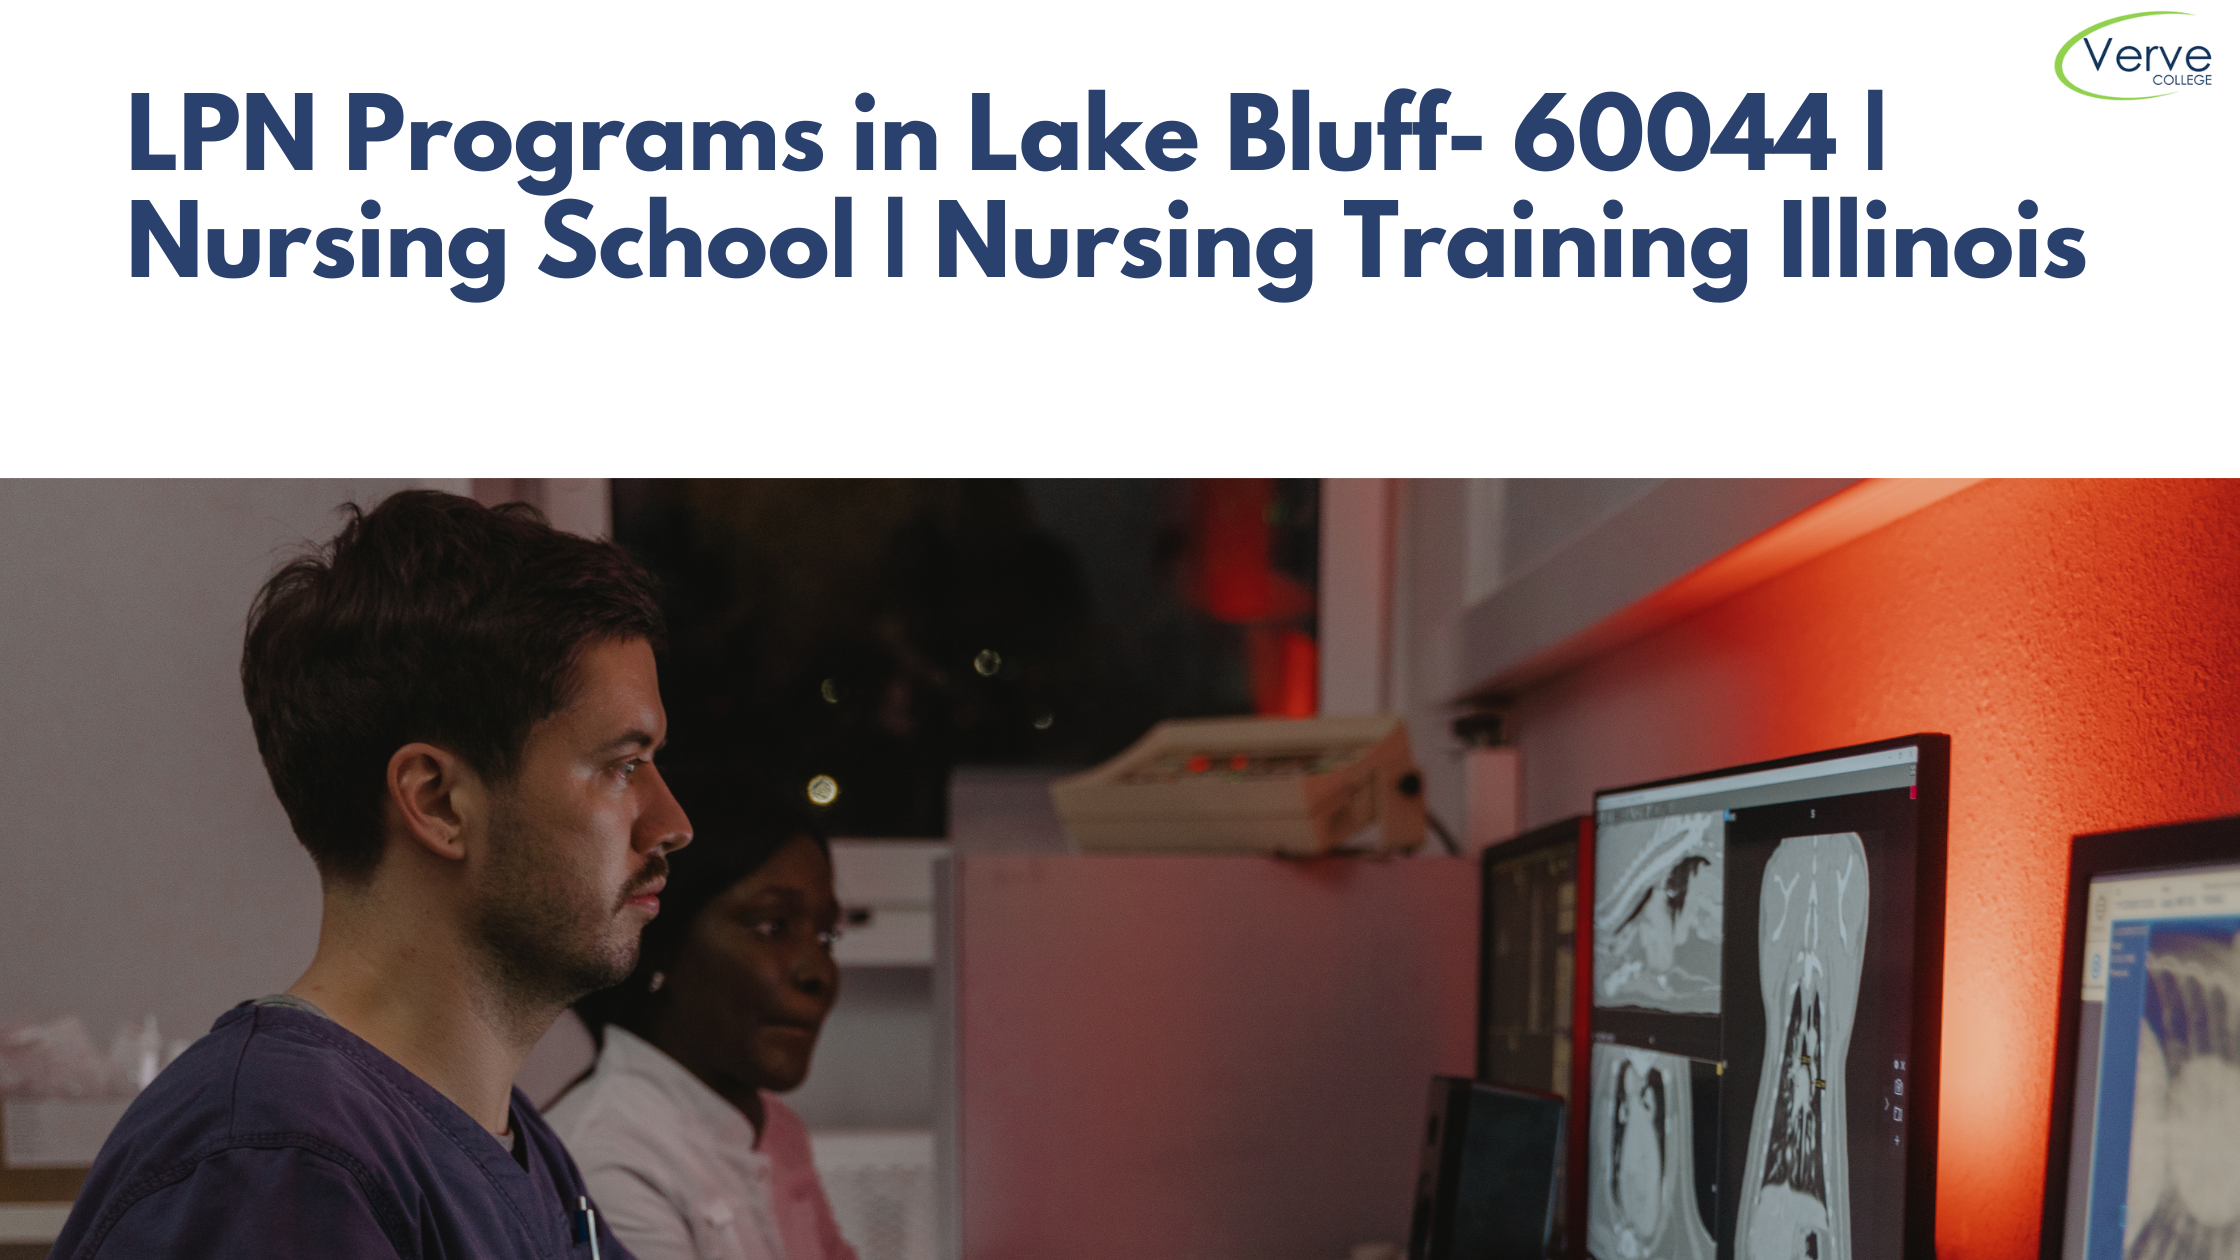 LPN Programs in Lake Bluff, IL – 60044 | Nursing School | Nursing Training Illinois